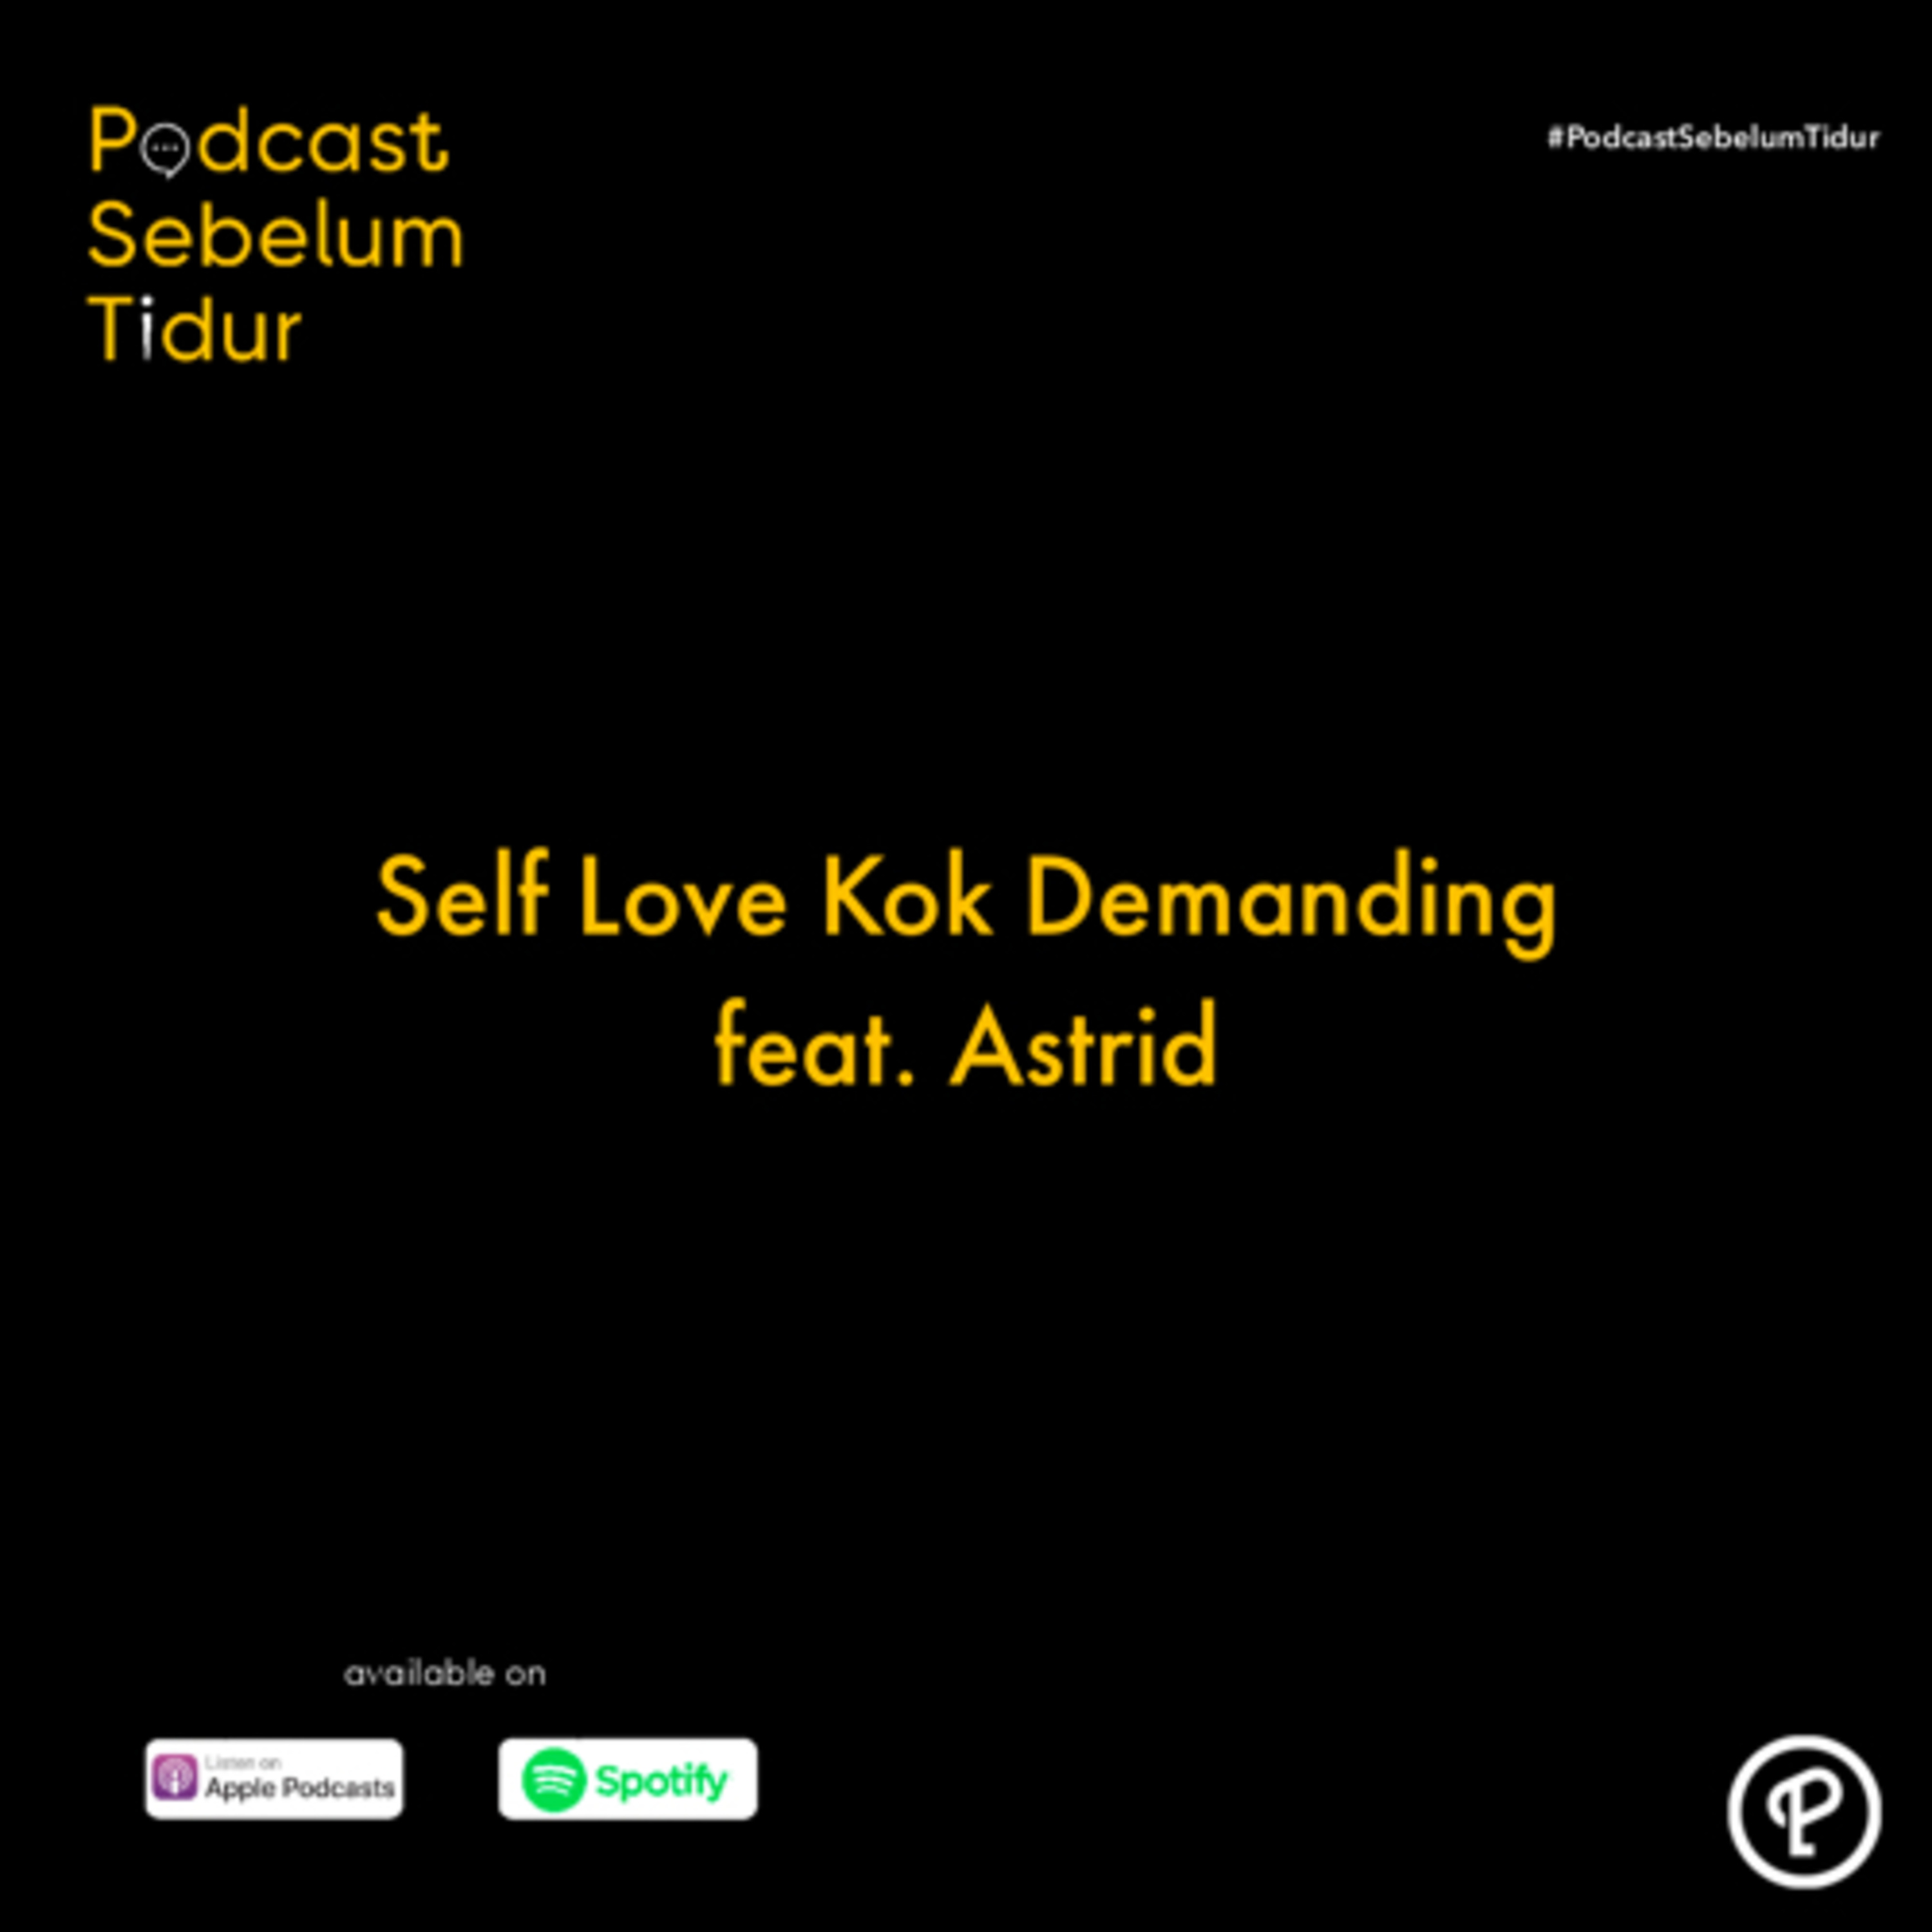 Self-Love kok Demanding feat. Astrid